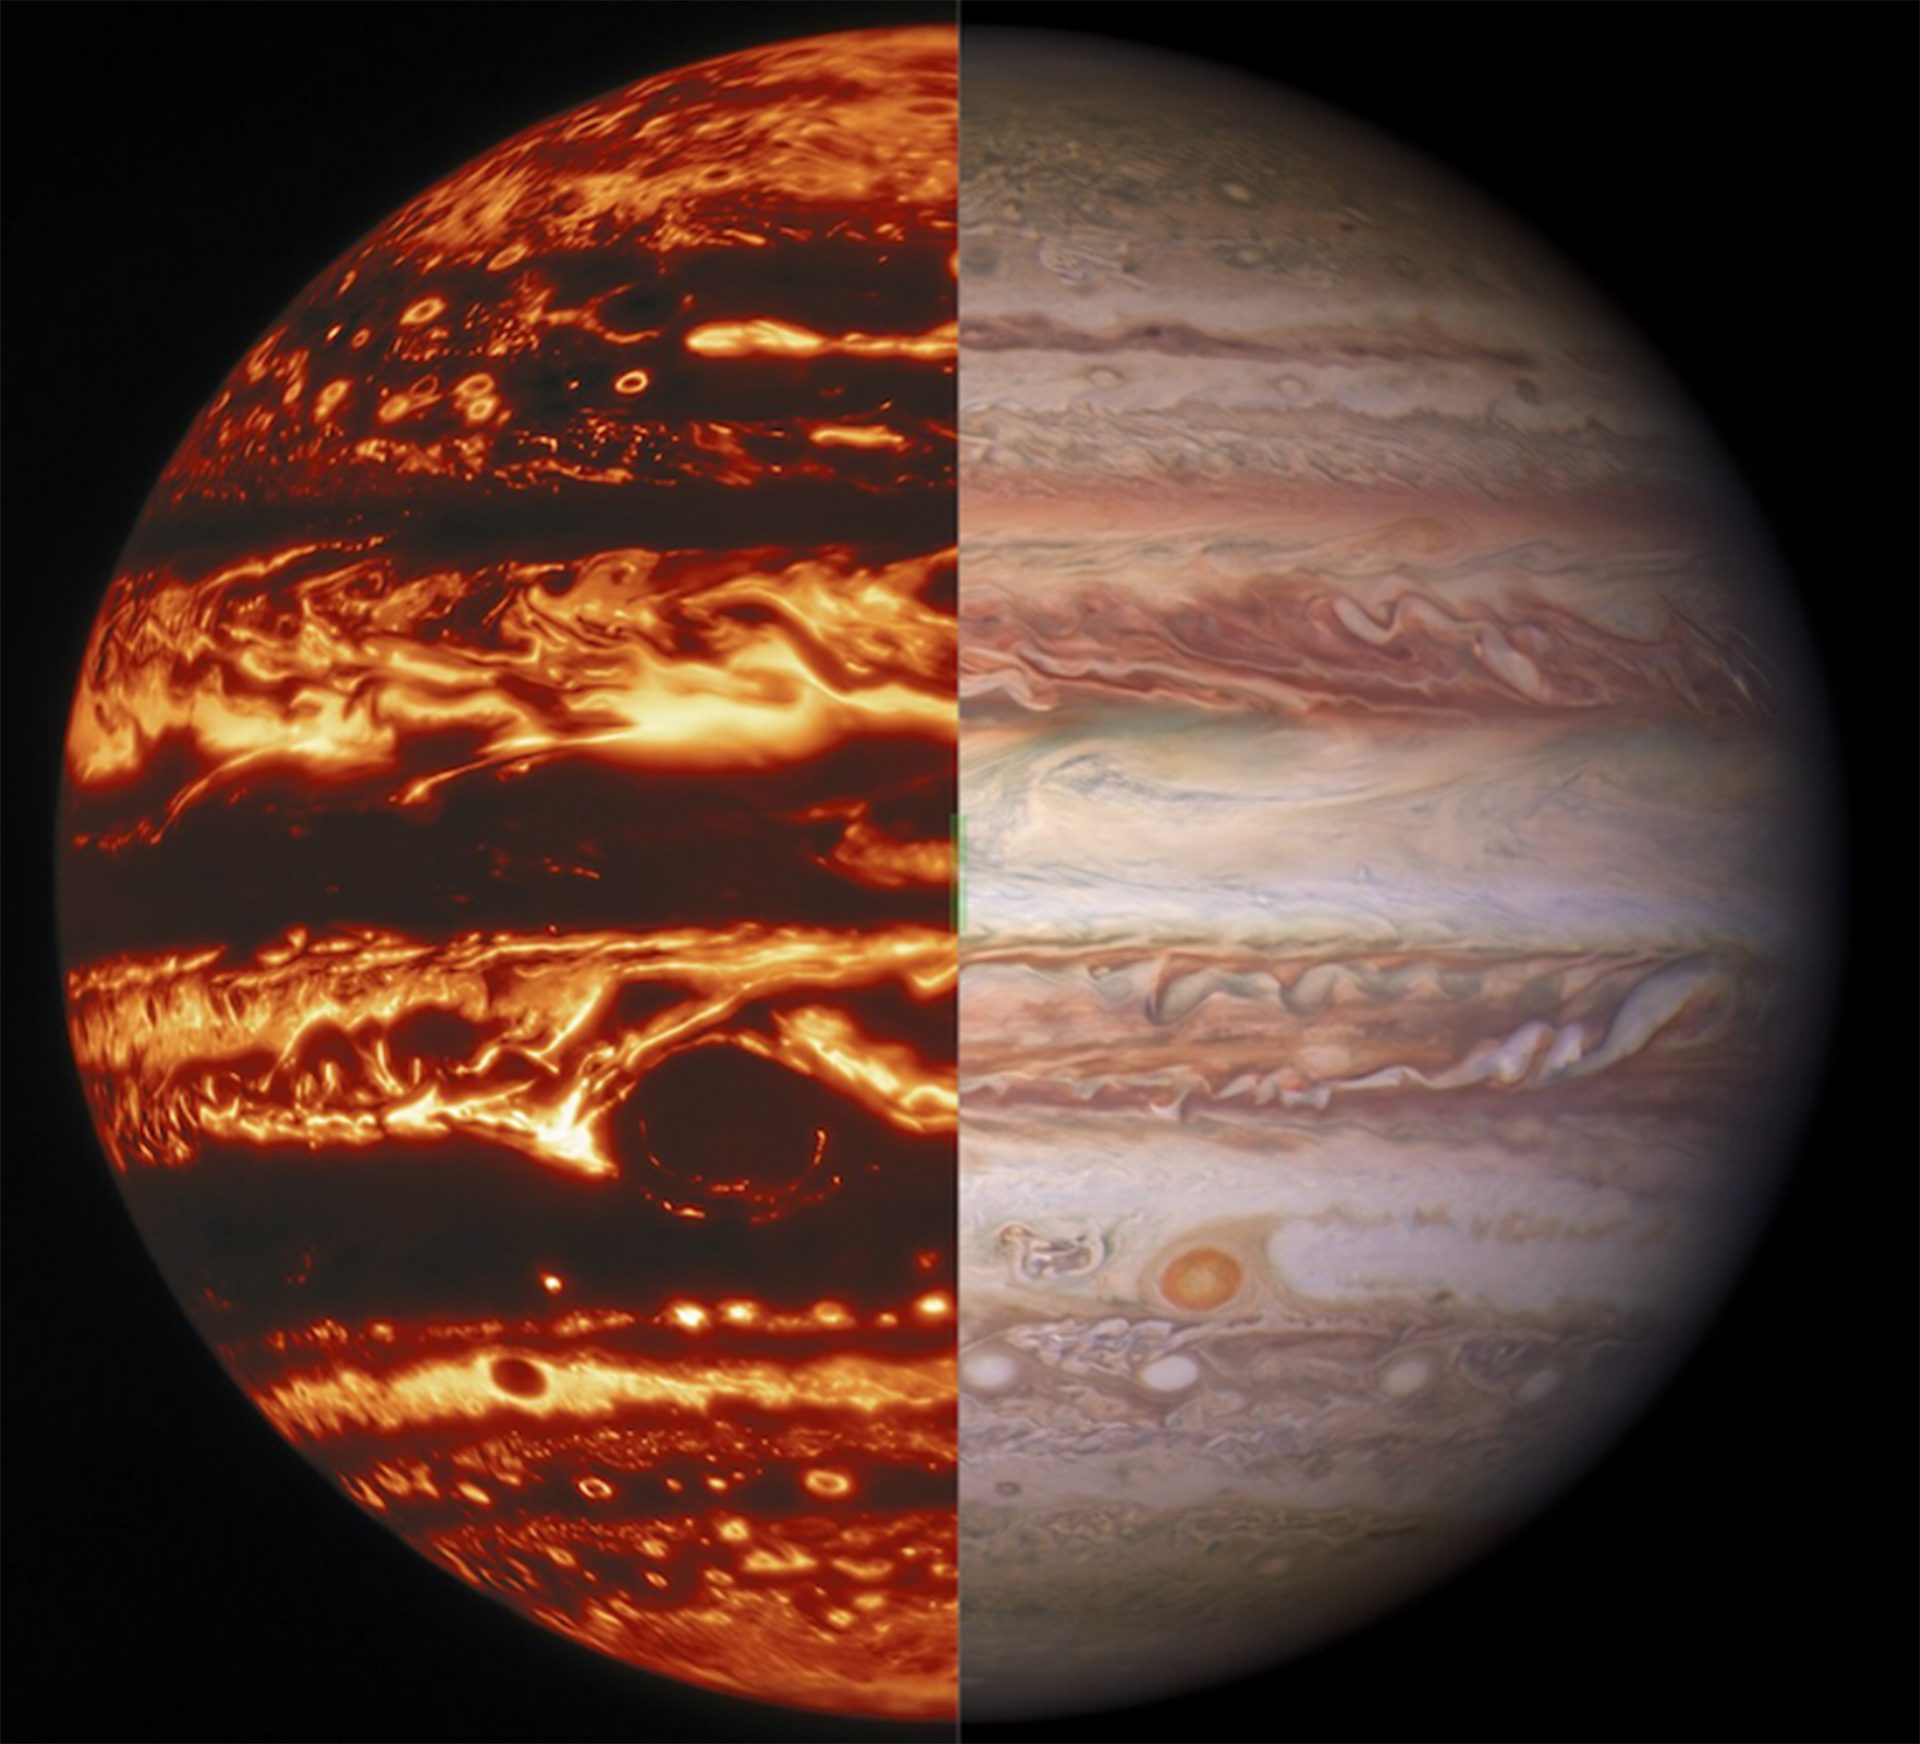 Jupiter’s monster storm no longer exact broad nonetheless surprisingly deep